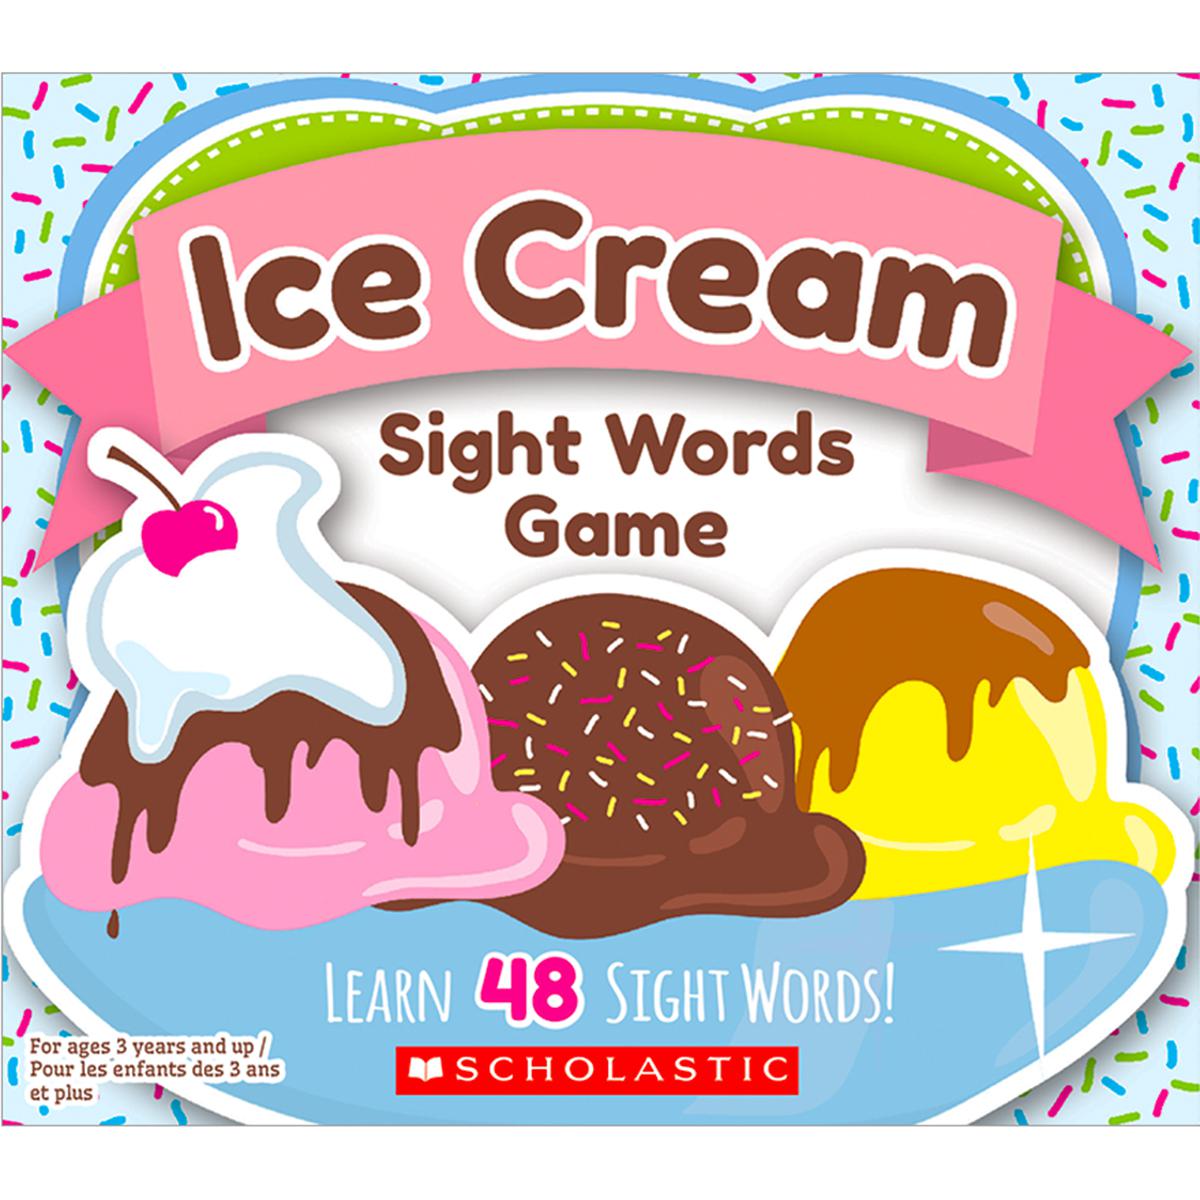  Ice Cream Sight Words Game 